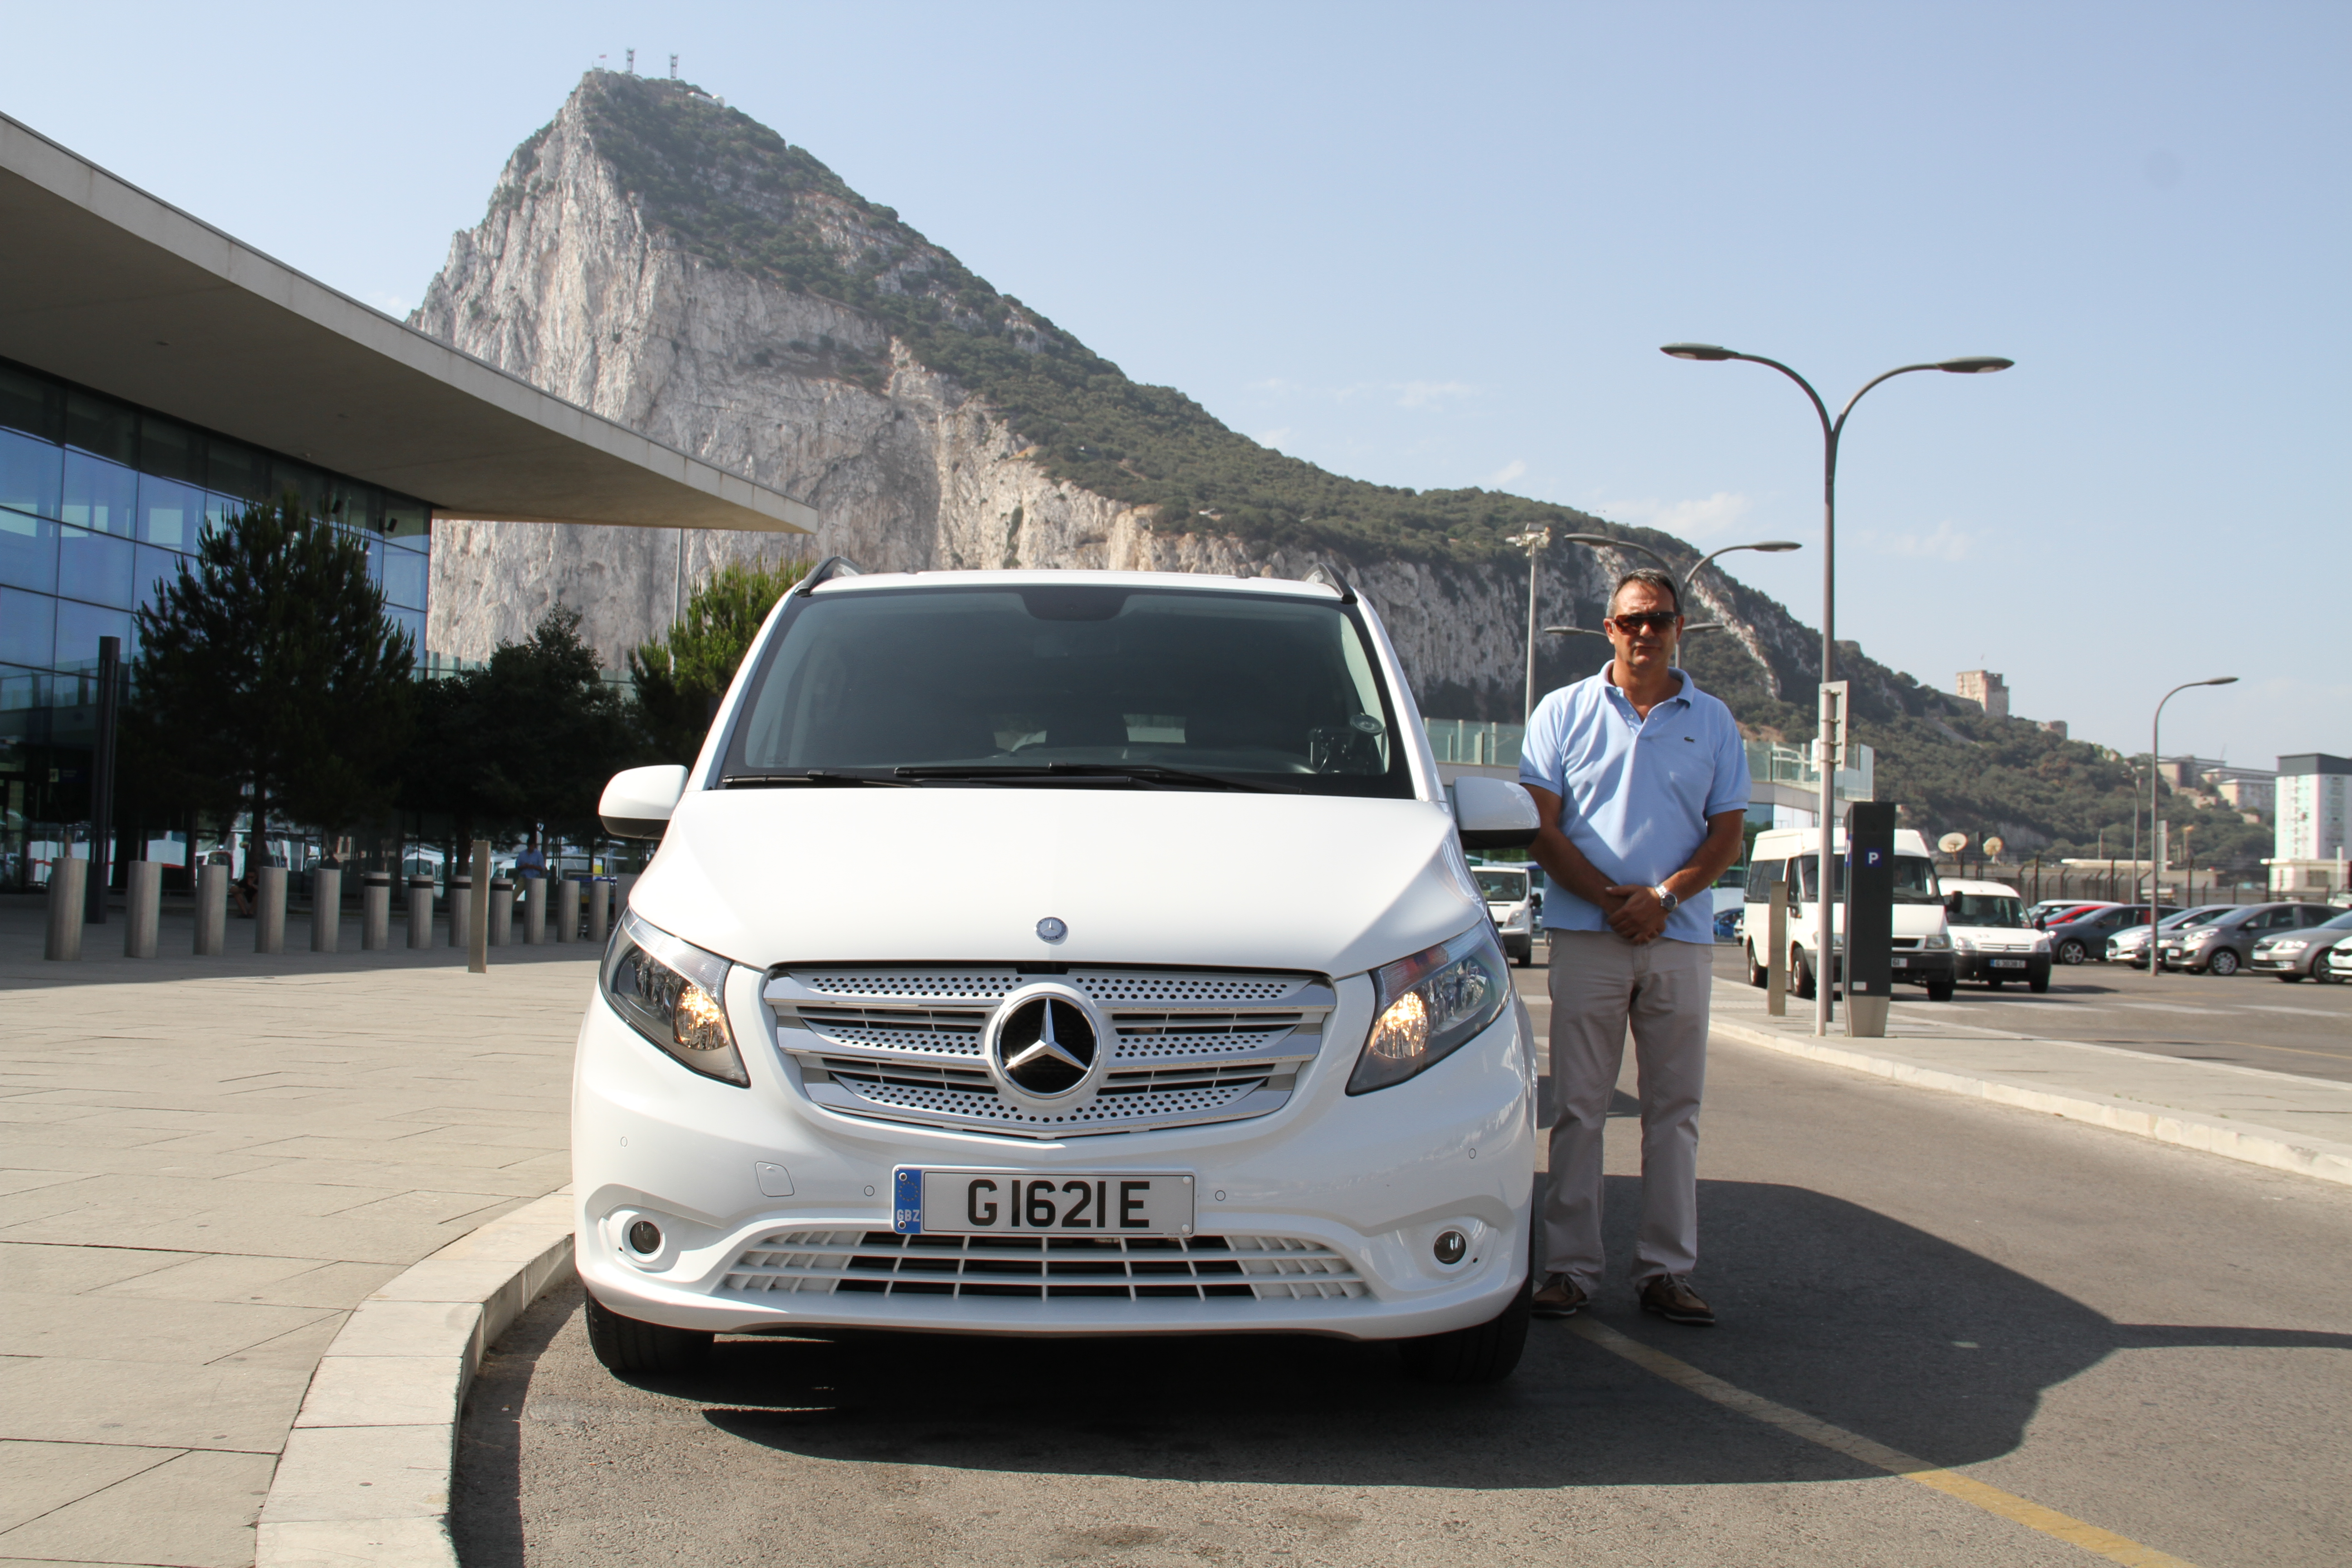 Gibraltar Tours